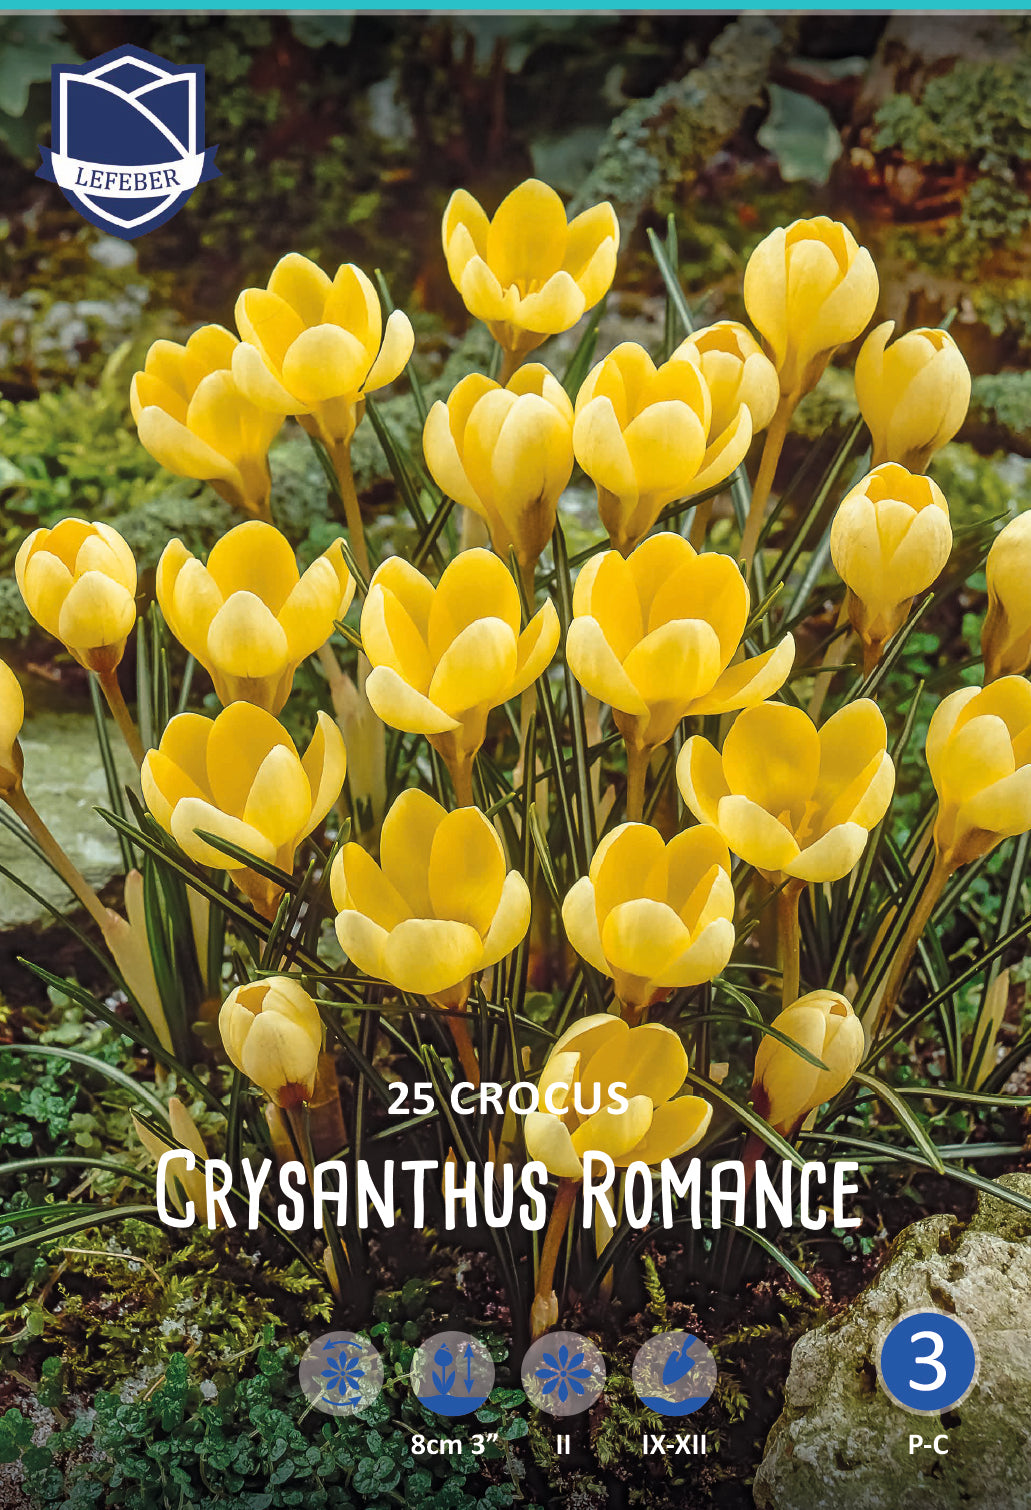 Crocus Crysanthus Romance